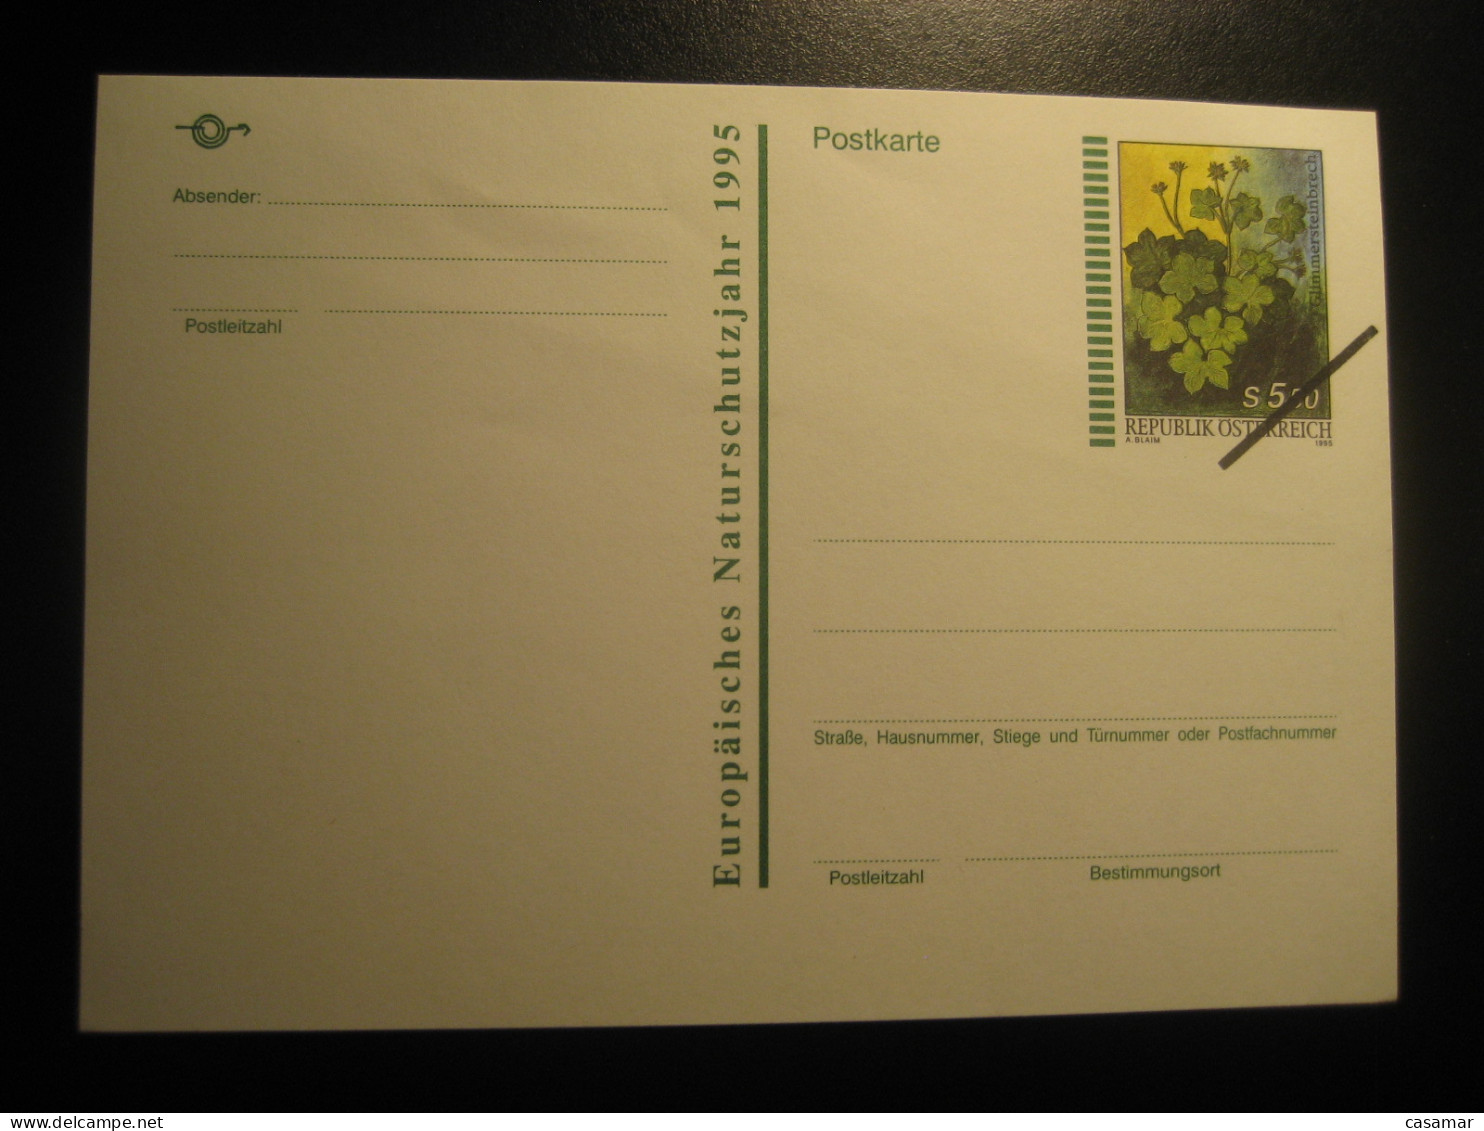 1995 Nature Glimmersteinbrech SPECIMEN Postal Stationery Card Overprinted AUSTRIA - Proofs & Reprints